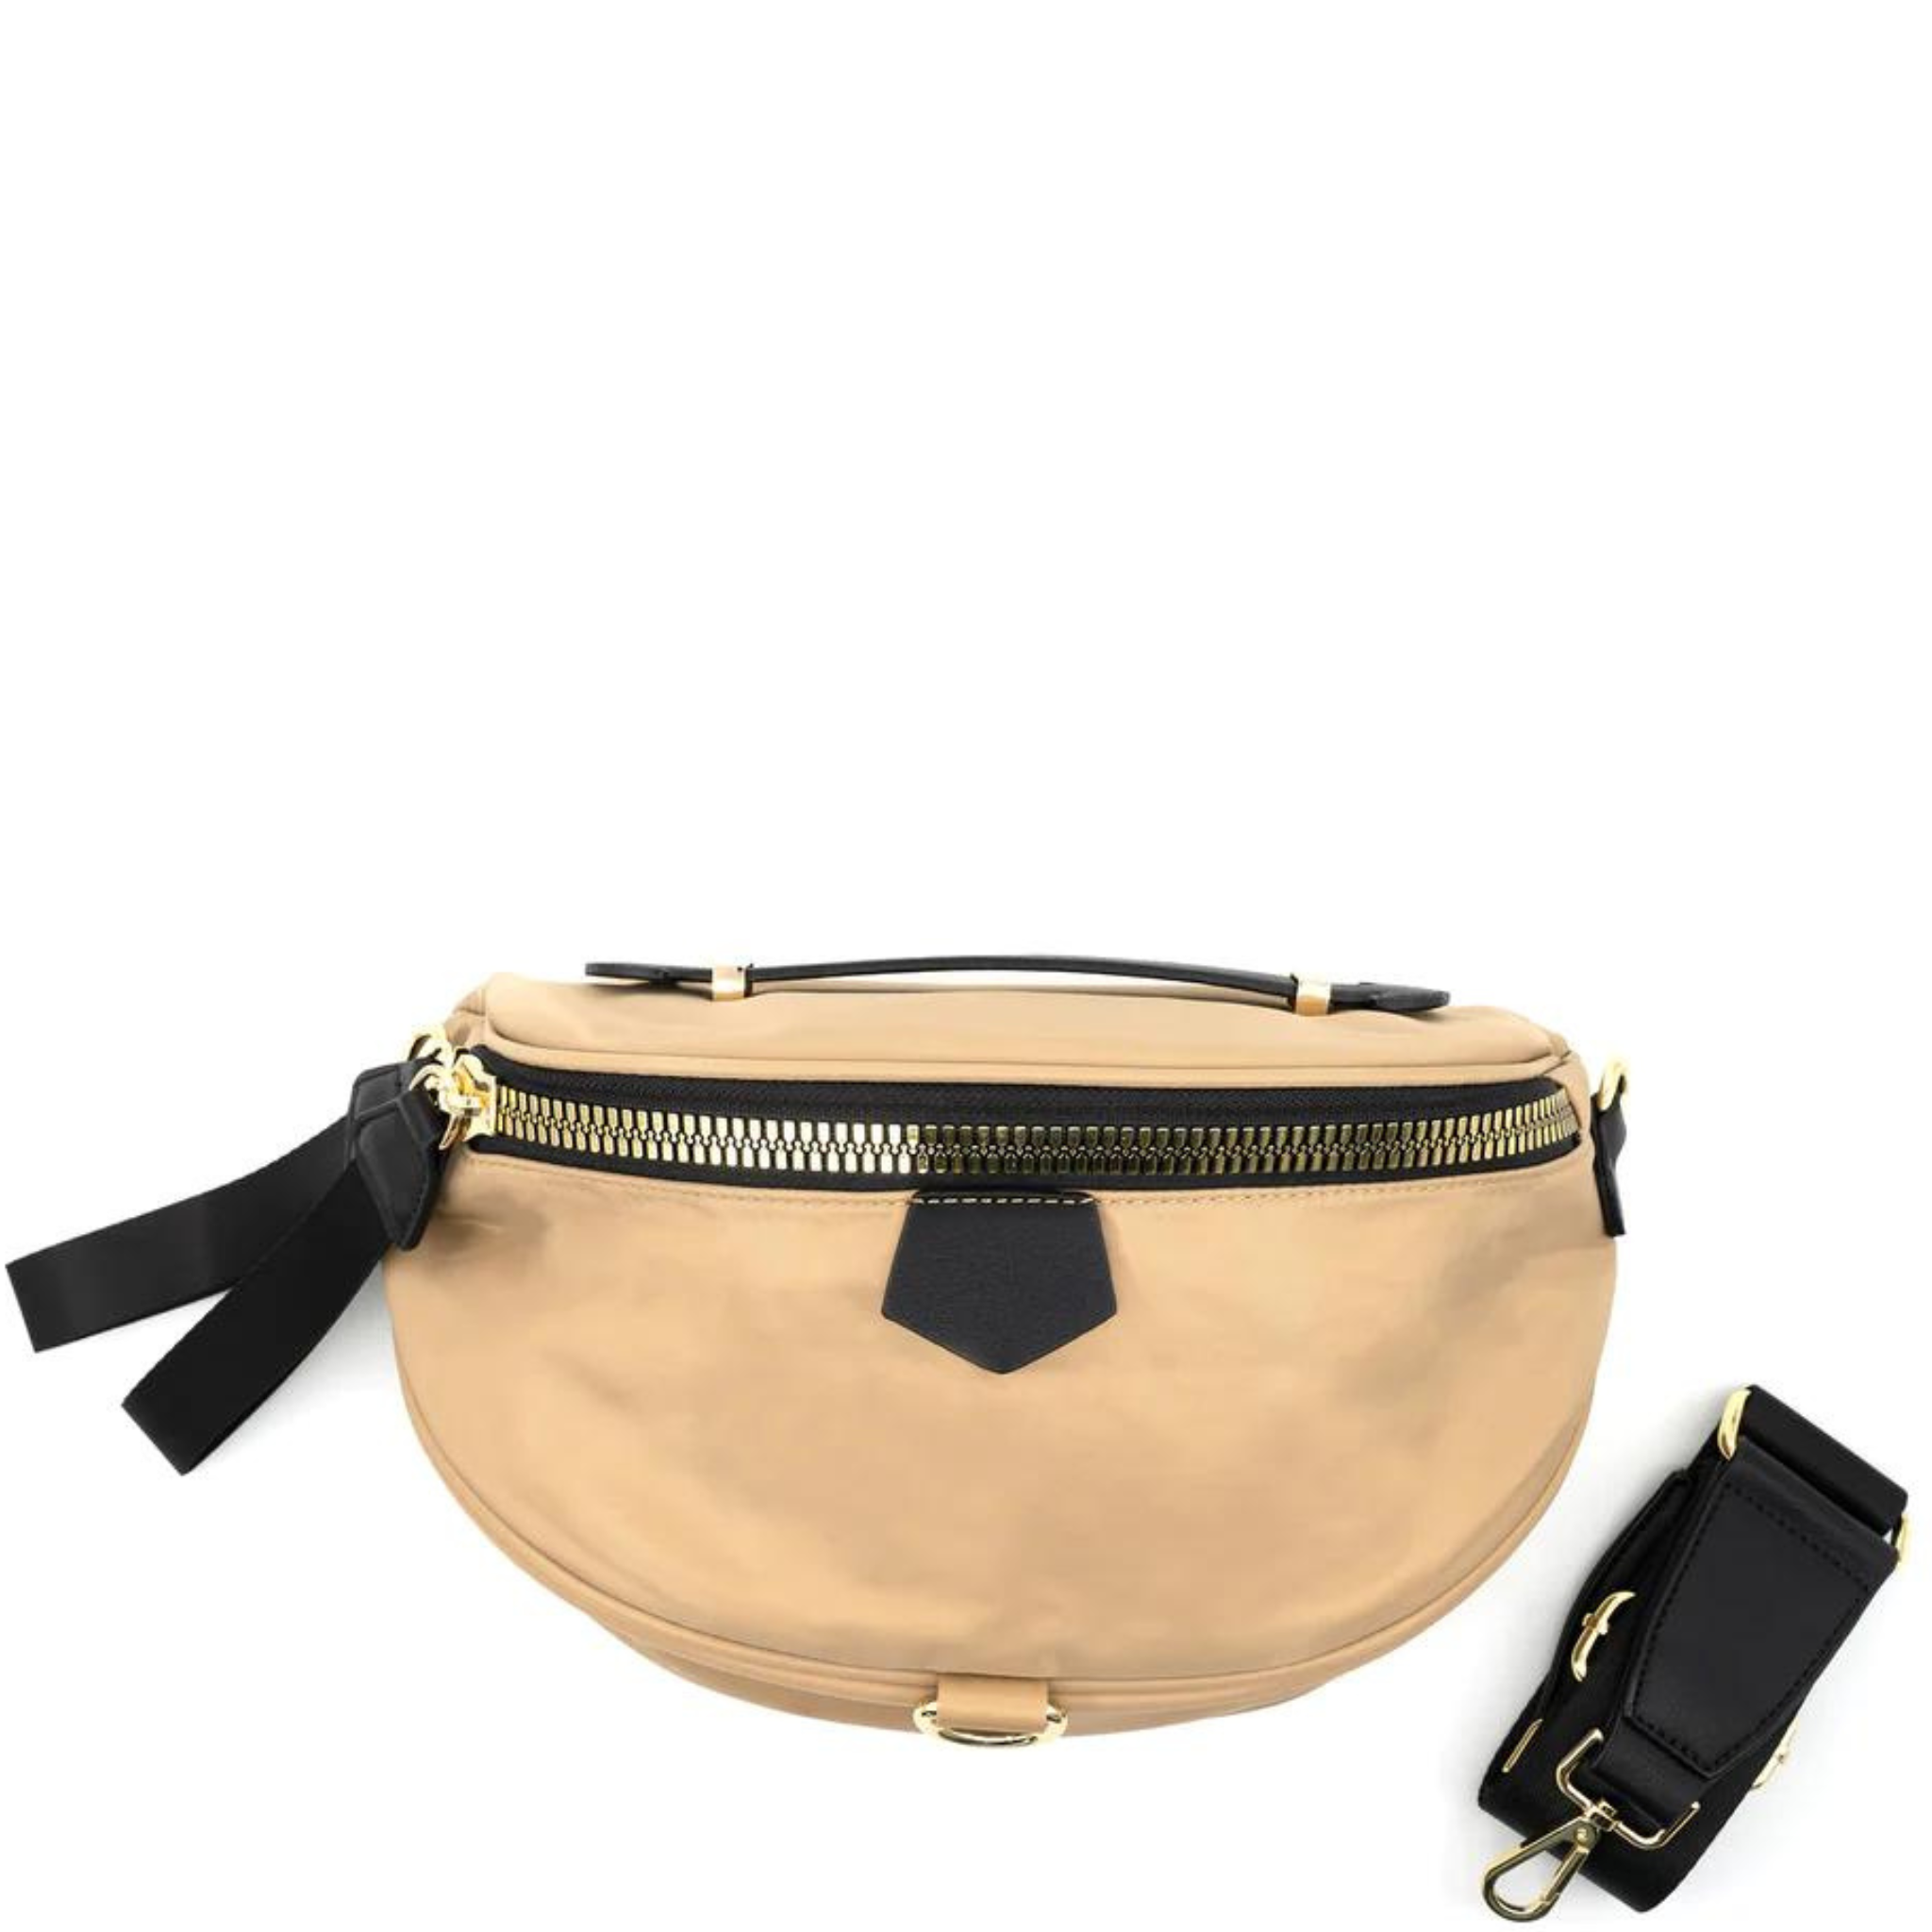 Nylon Sling / Crossbody Bag with Top Handle